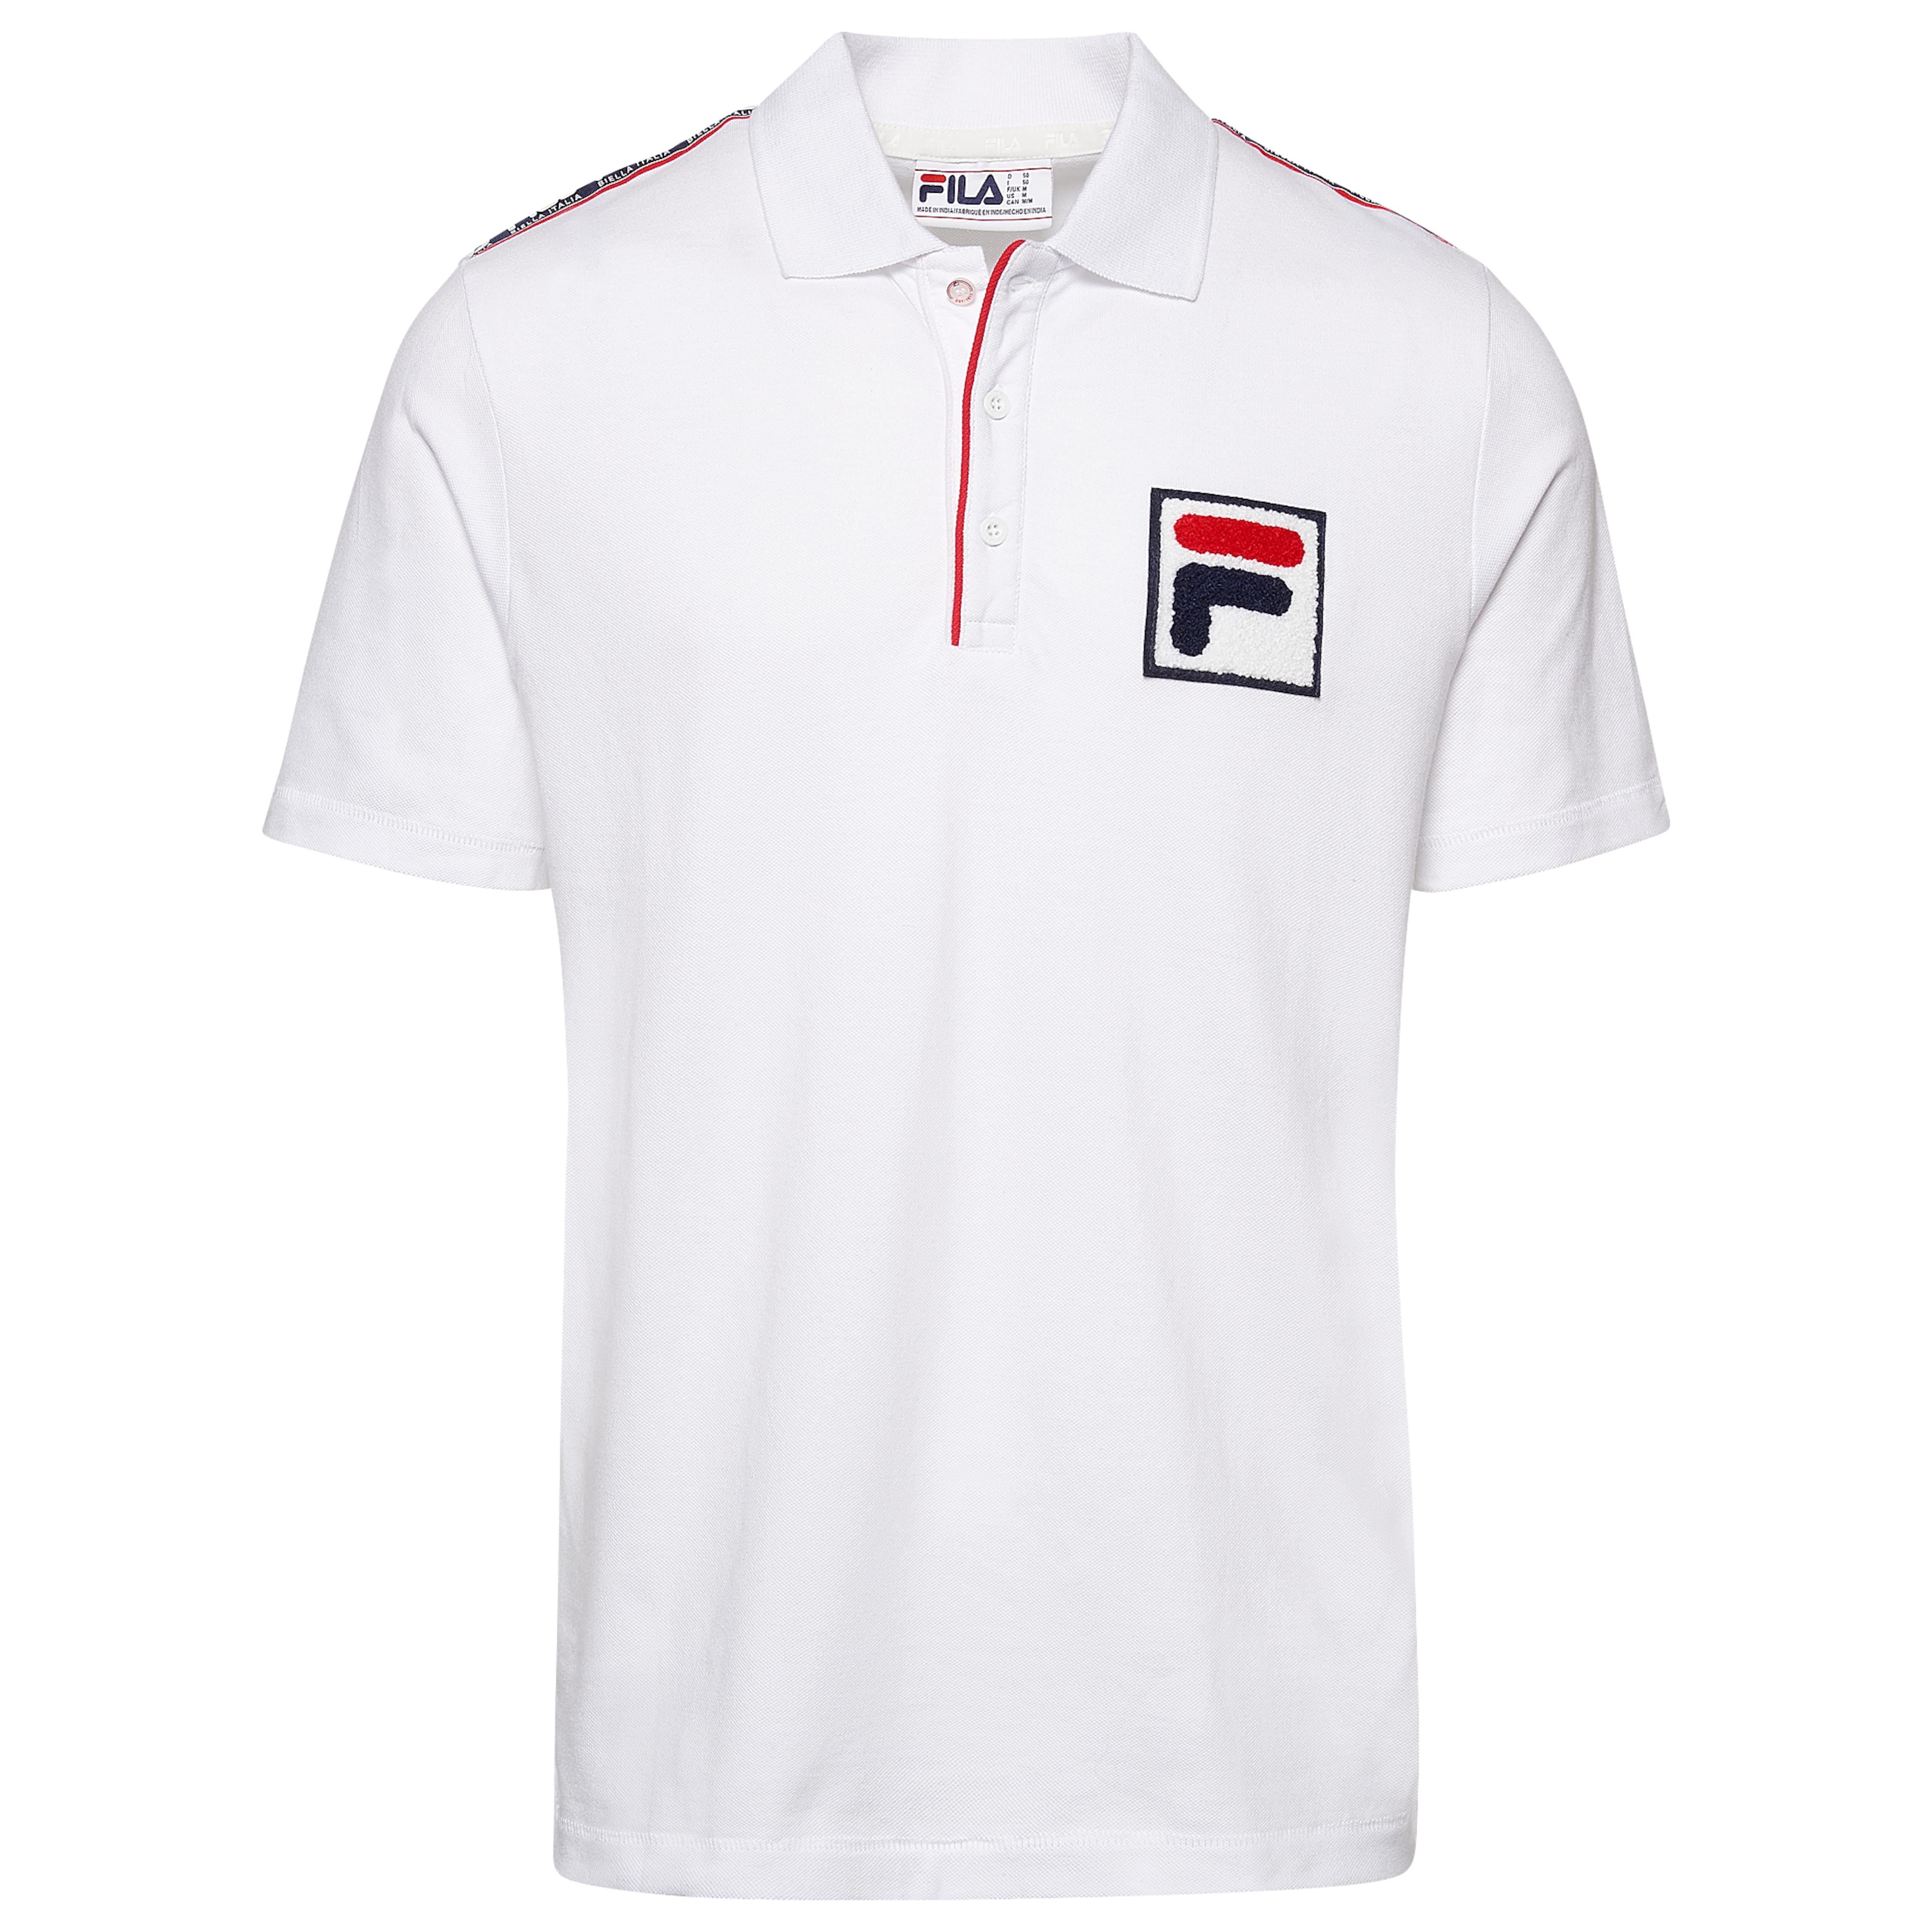 Fila Cotton Biella Italia Polo Shirt in White/Navy/Red (White) for Men -  Lyst